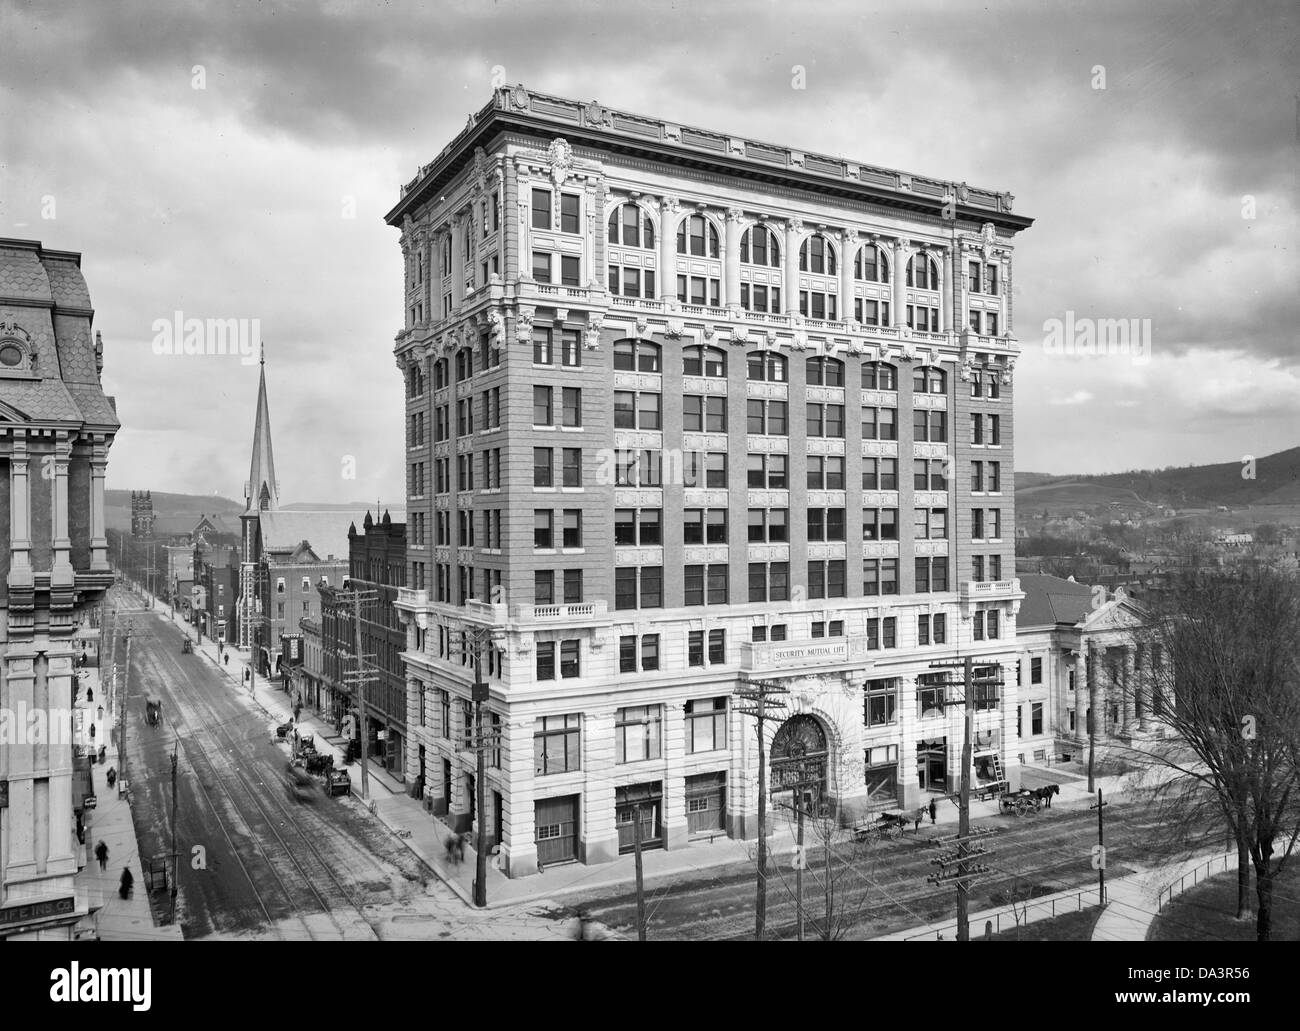 Security Mutual Life Insurance Co. building, Binghamton, NY, circa 1905 Stock Photo